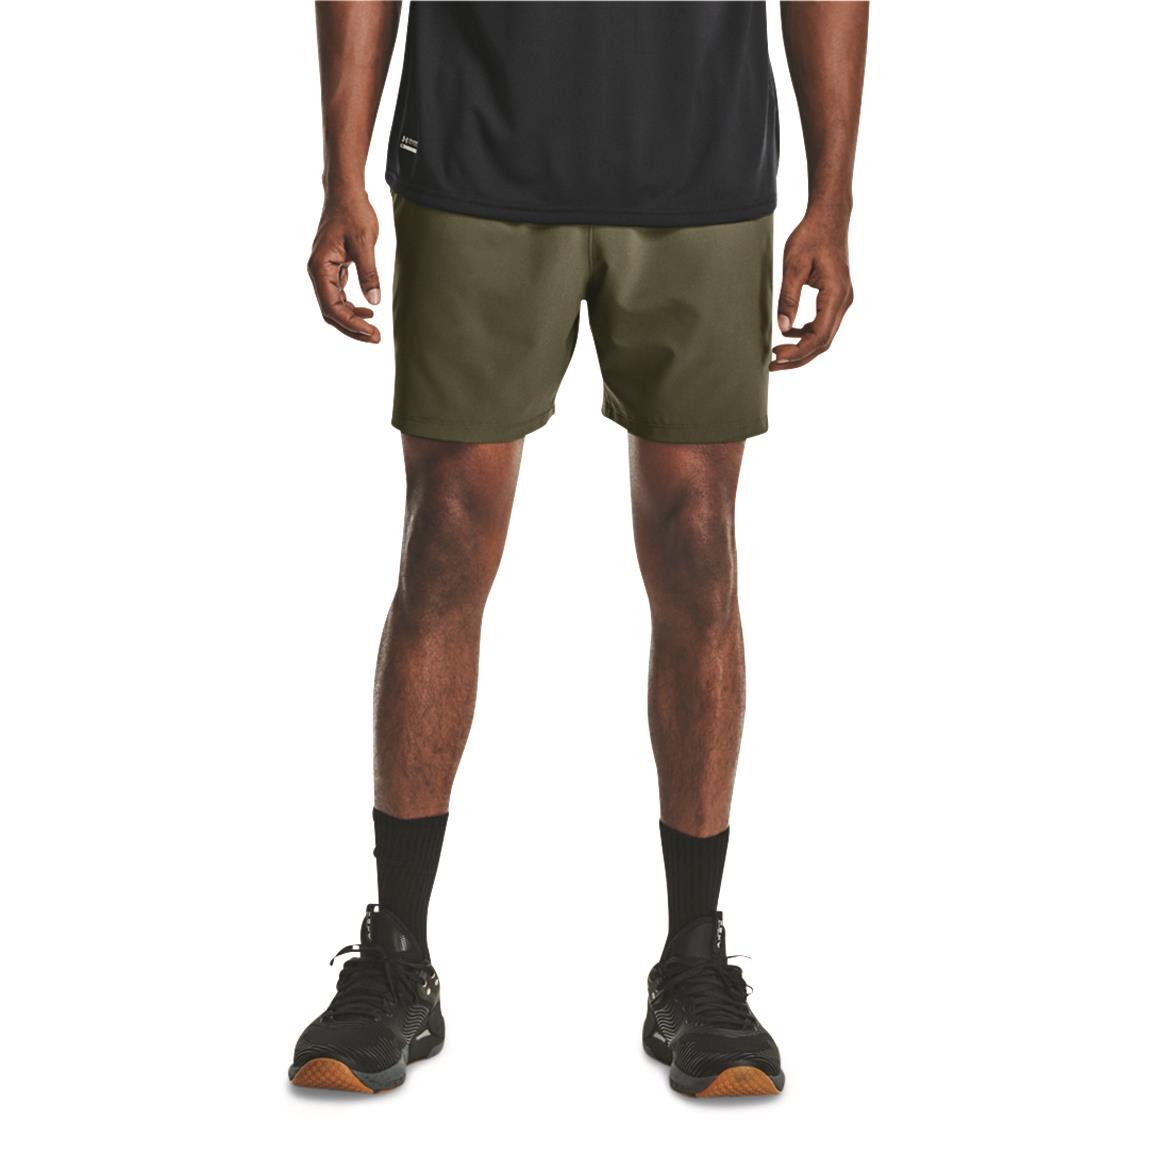 Under Armour Men's Tac PT Shorts, Marine OD Green/Marine OD Green